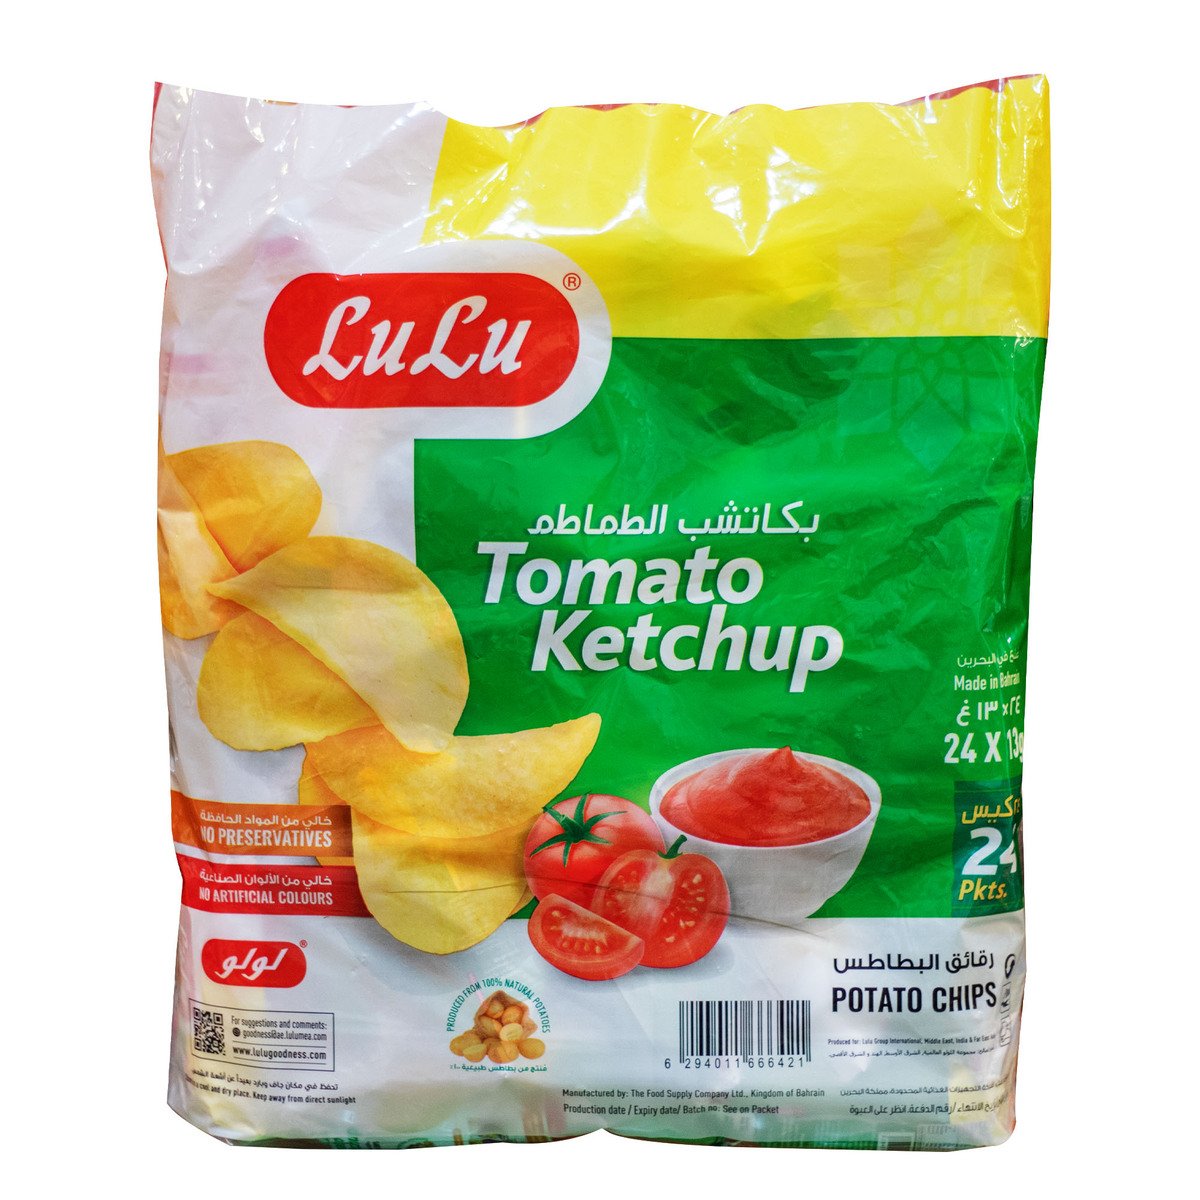 LuLu Potato Chips Tomato Ketchup 13 g